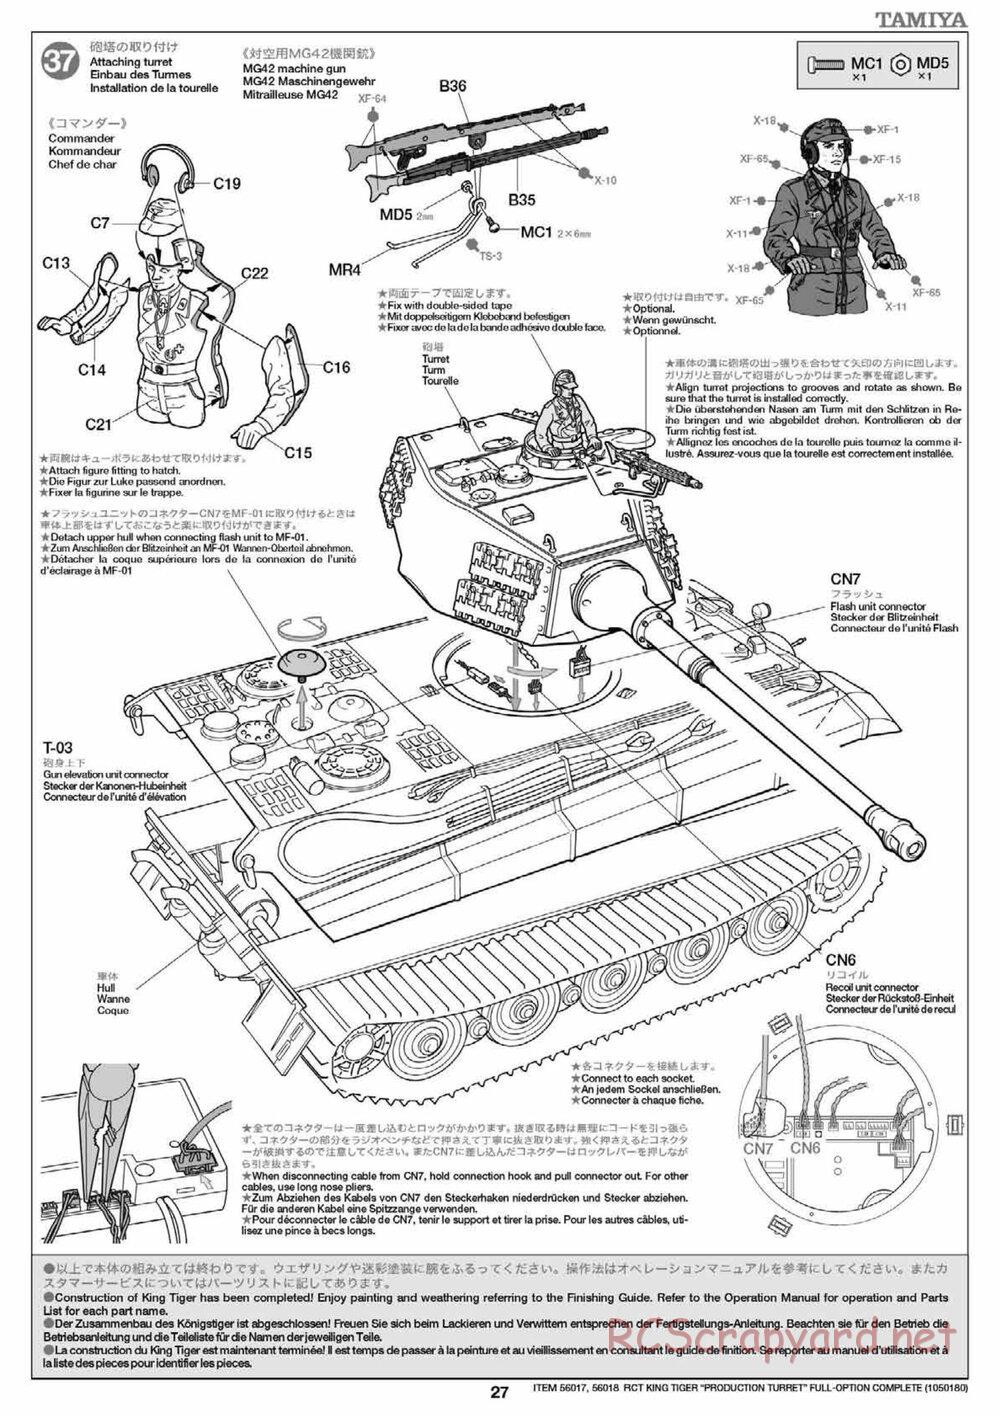 Tamiya - King Tiger - 1/16 Scale Chassis - Manual - Page 27